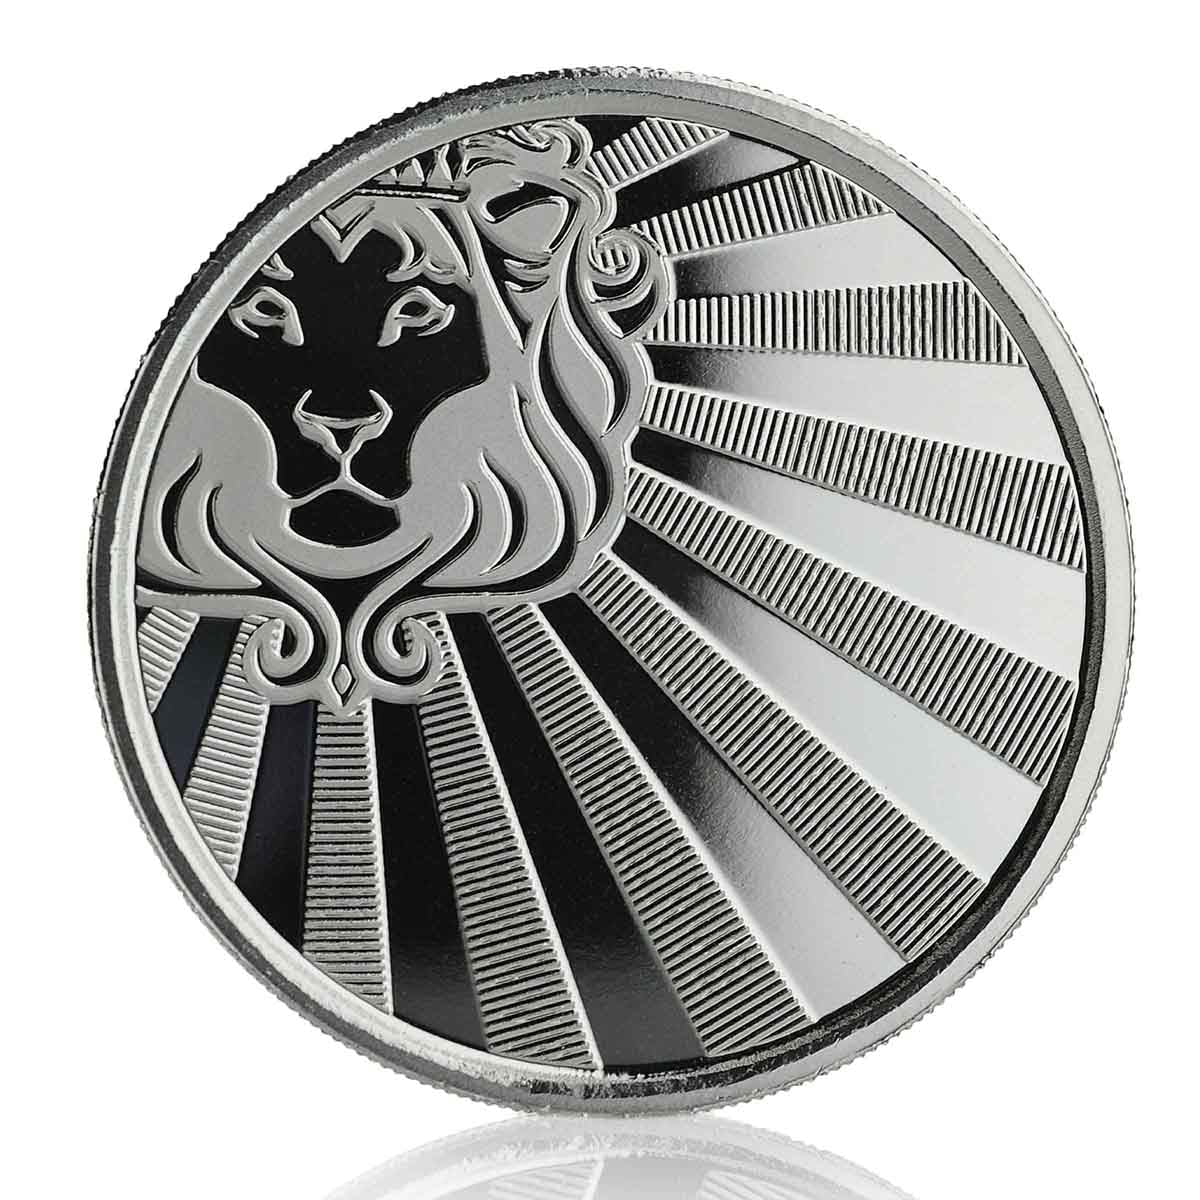 Great round. 1 Oz 999 Silver. Scottsdale Mint. Серебристые oz. International Silver Ltd..Inc. .999 1rtoy oz..